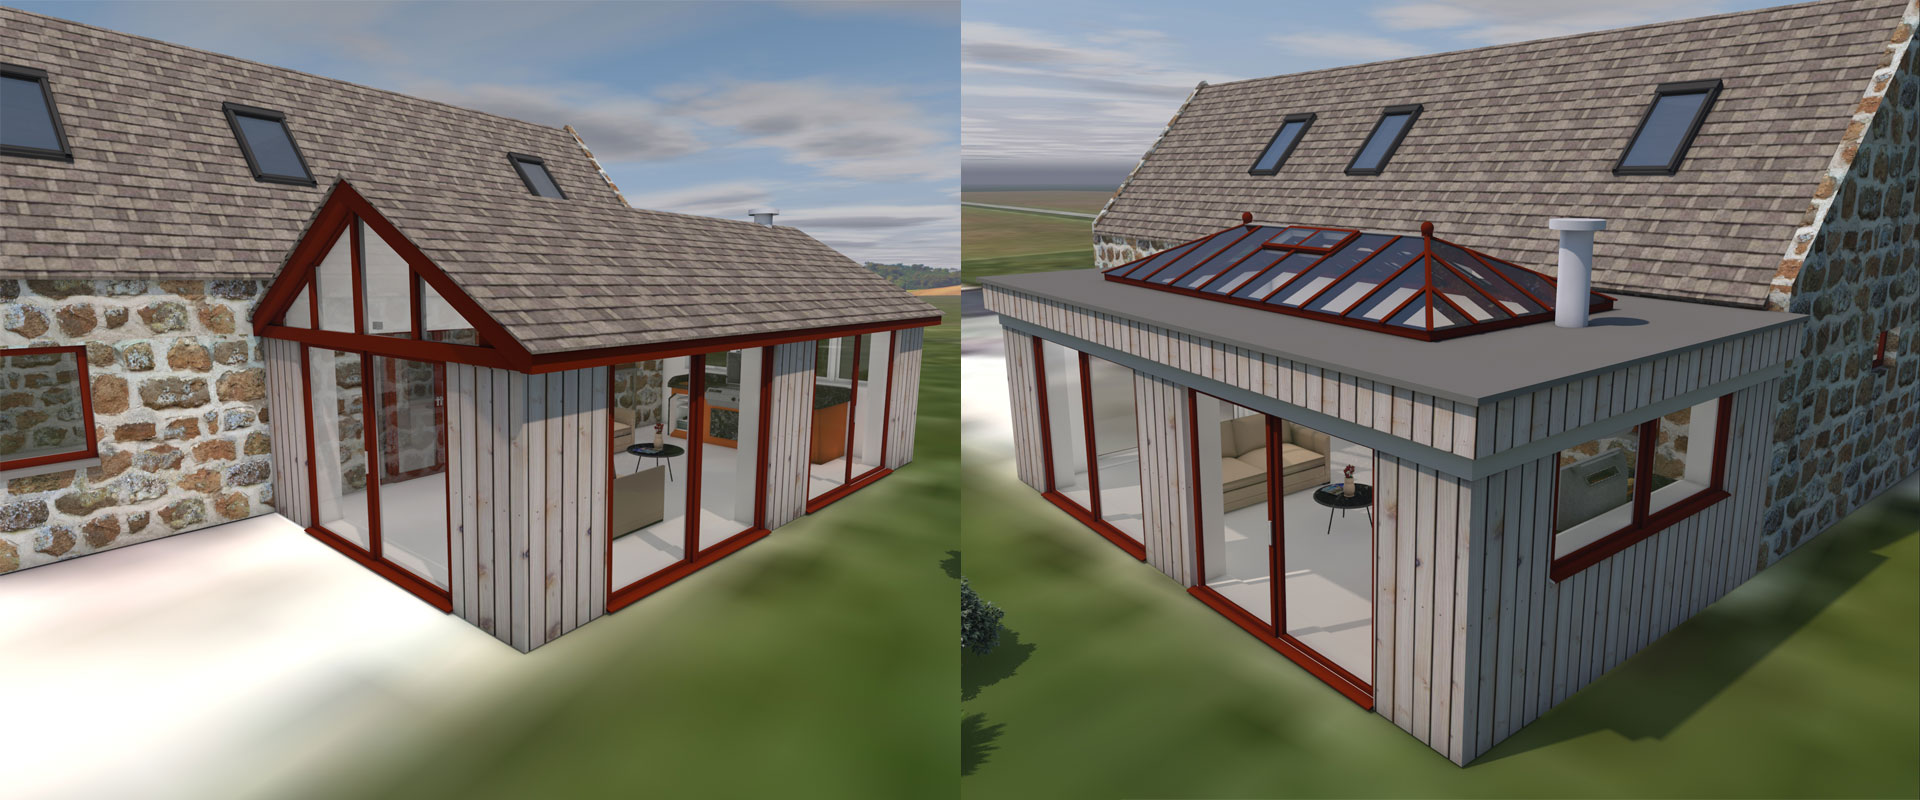 Roof Extensions Designs & Bungalow Designs Uk | Conversion ...